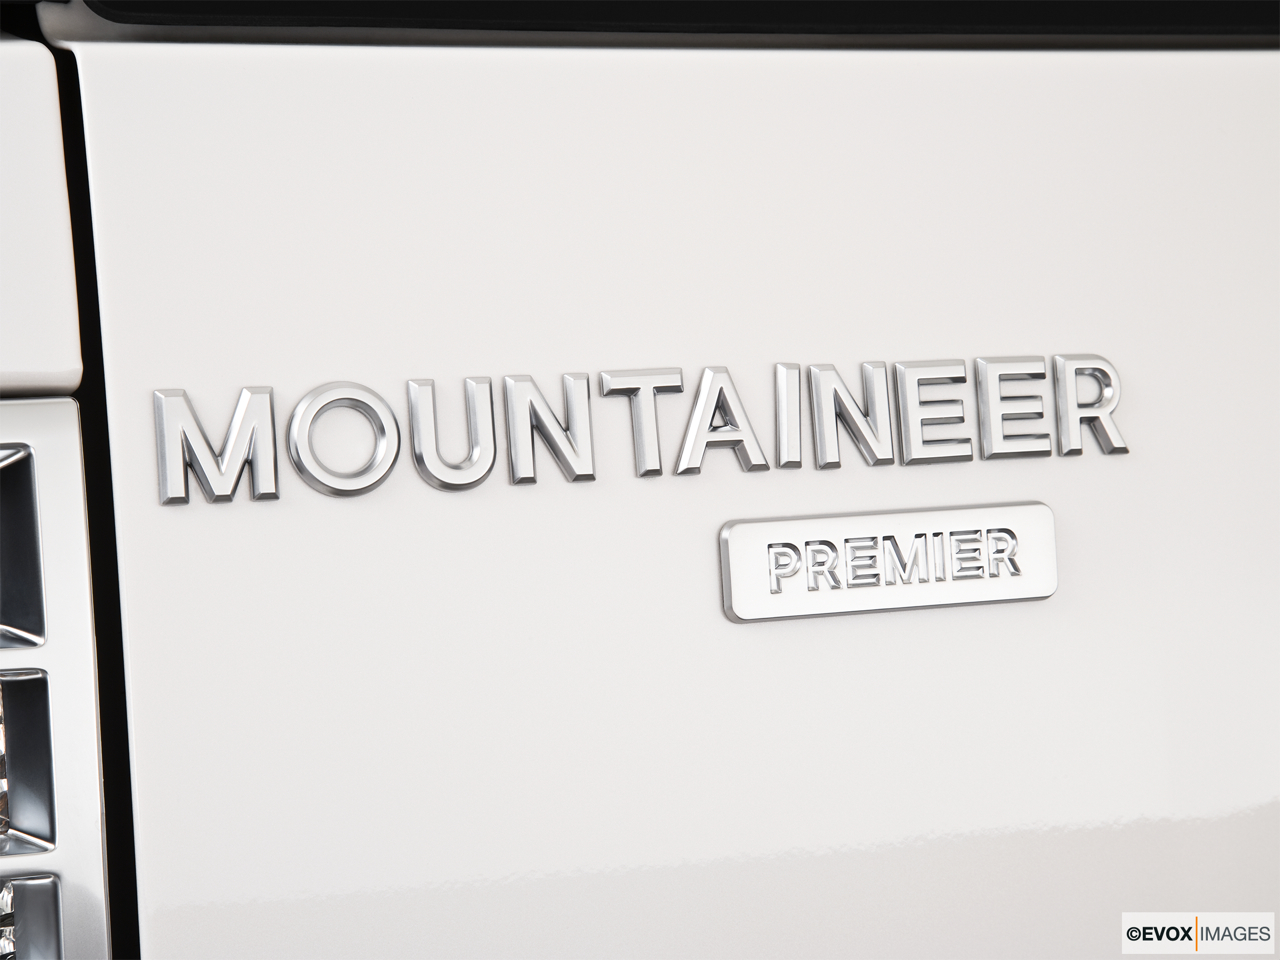 2010 Mercury Mountaineer Premier Rear model badge/emblem 